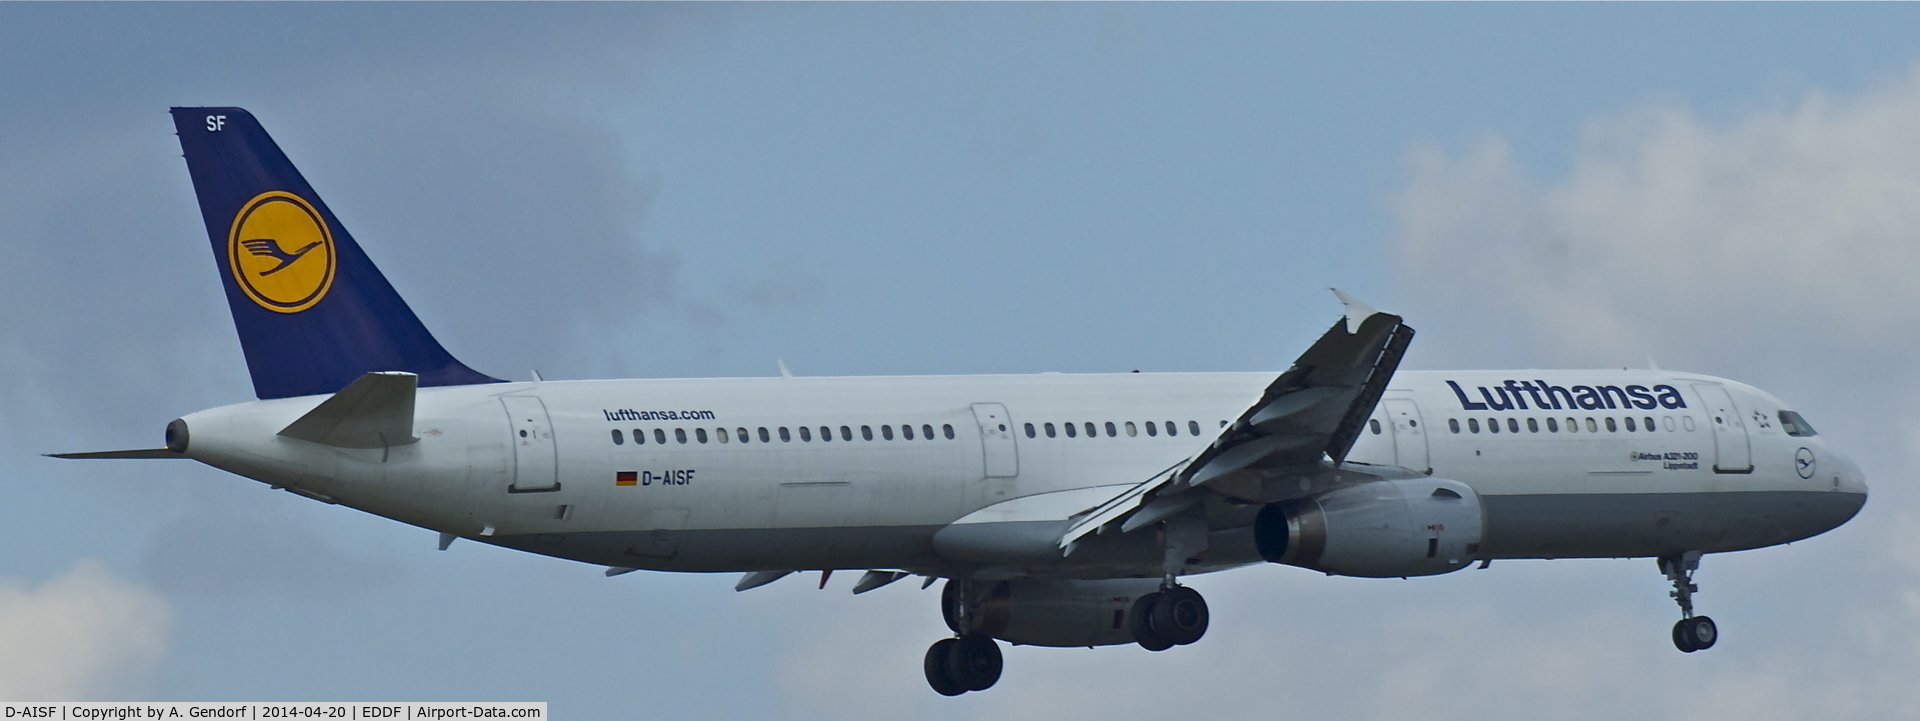 D-AISF, 2000 Airbus A321-231 C/N 1260, Lufthansa, is here on short final RWY 25R at Frankfurt Rhein/Main Int'l(EDDF)